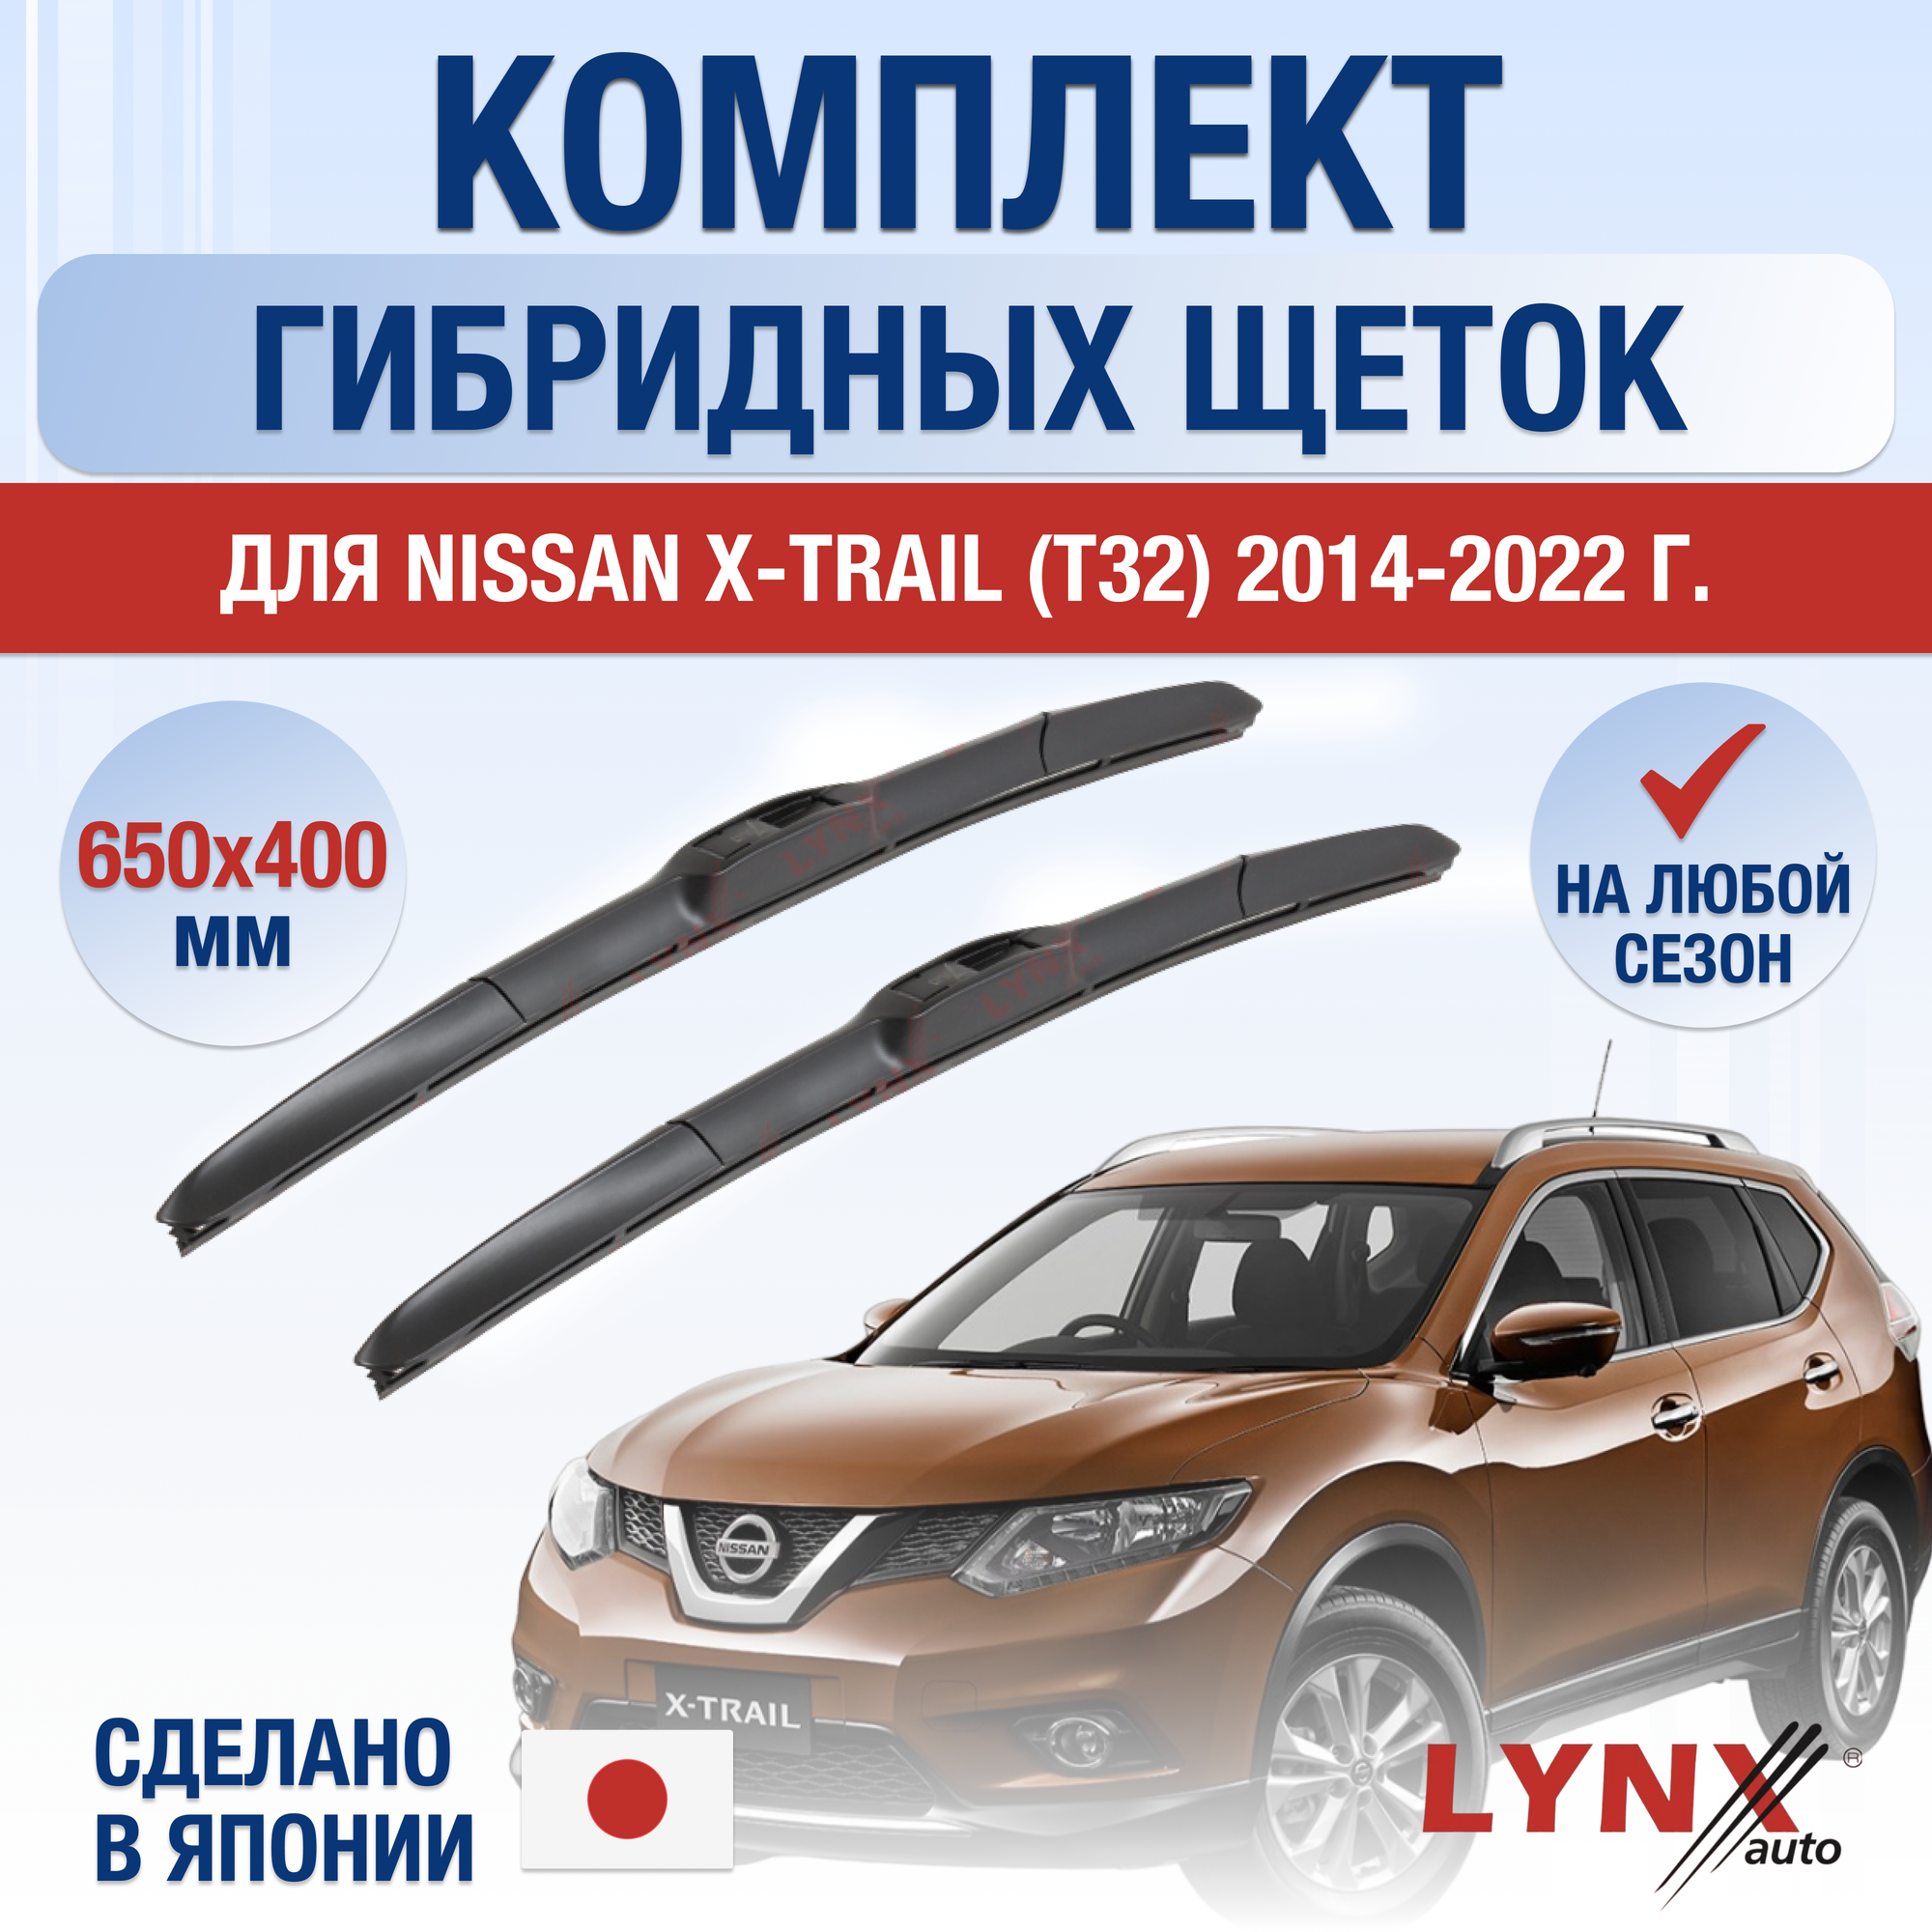 Щетки стеклоочистителя для Nissan X-Trail T32 / 2014 2015 2016 2017 2018 2019 2020 2021 2022 / Комплект гибридных дворников 650 400 мм Ниссан Икс-Трейл